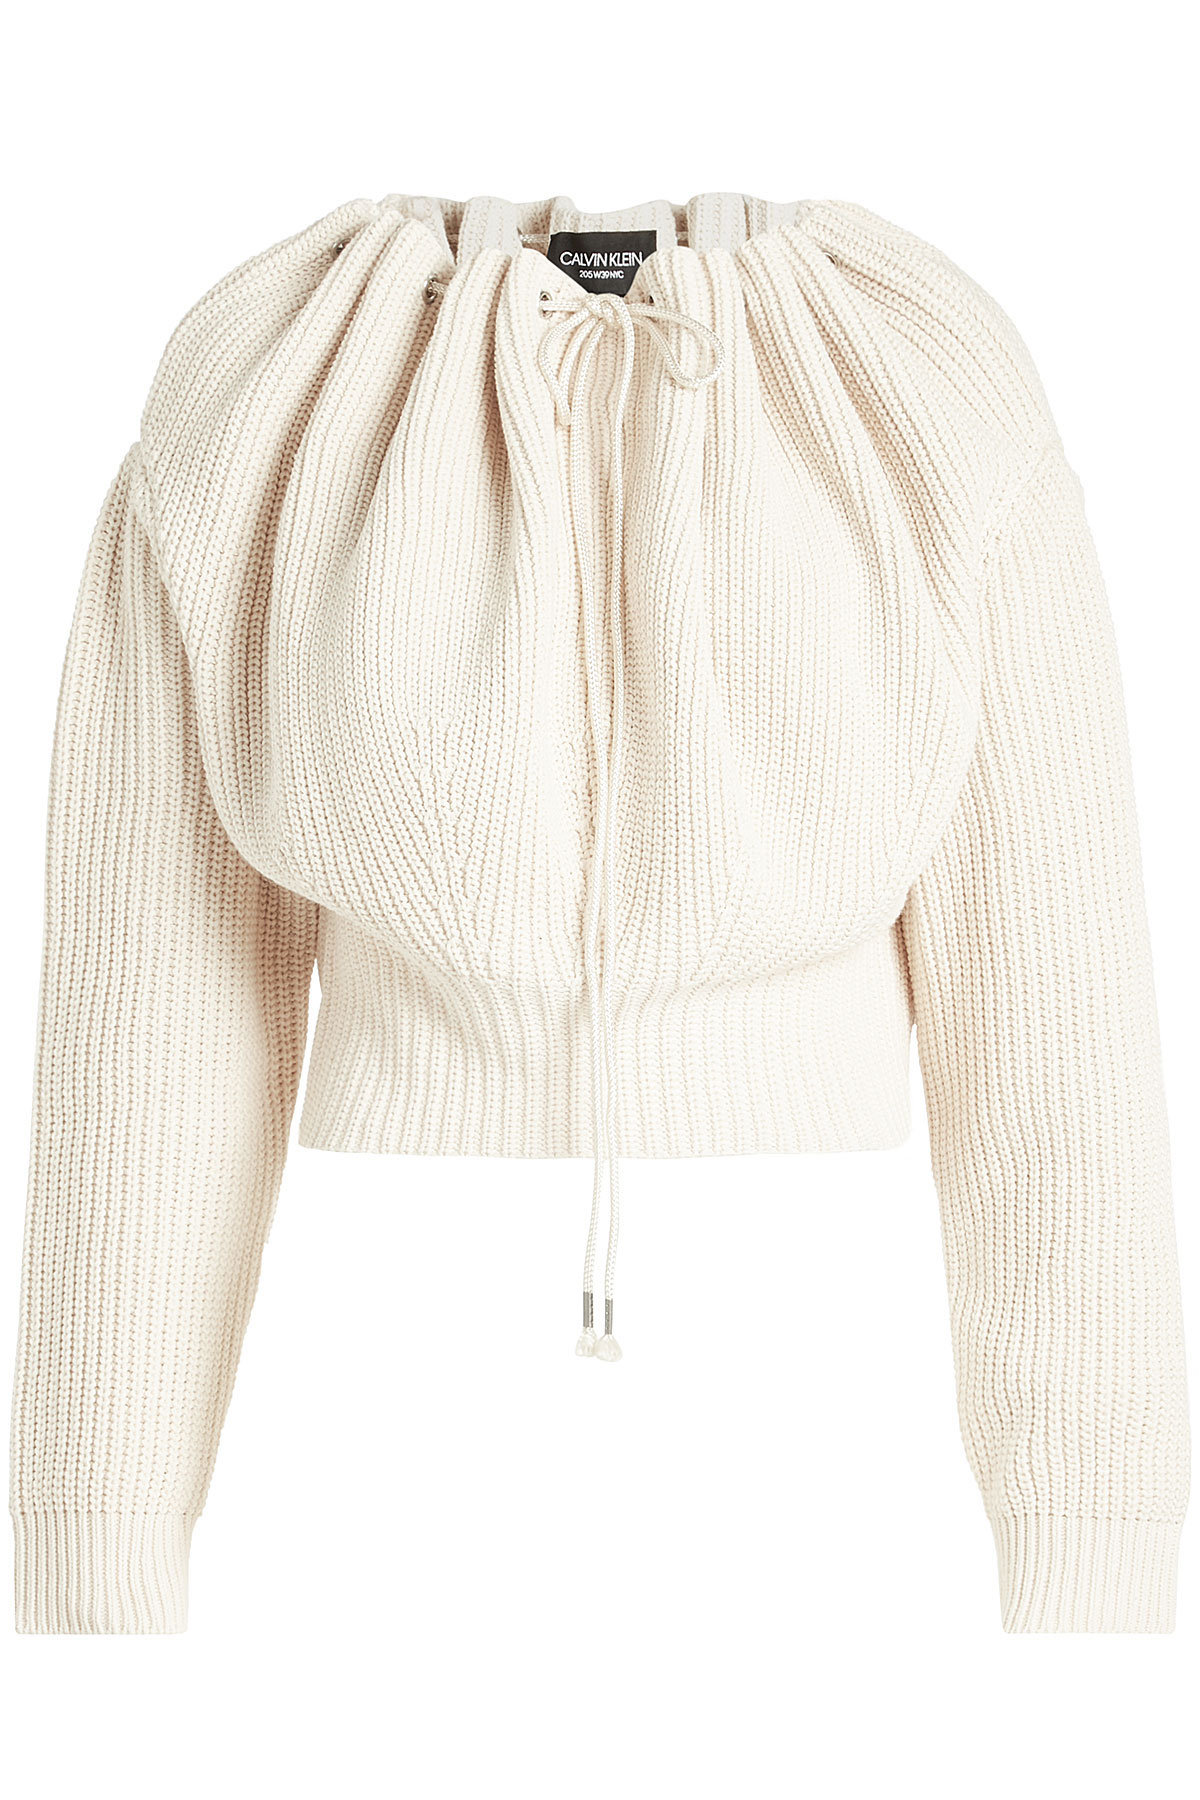 CALVIN KLEIN 205W39NYC - Off-Shoulder Knit Pullover